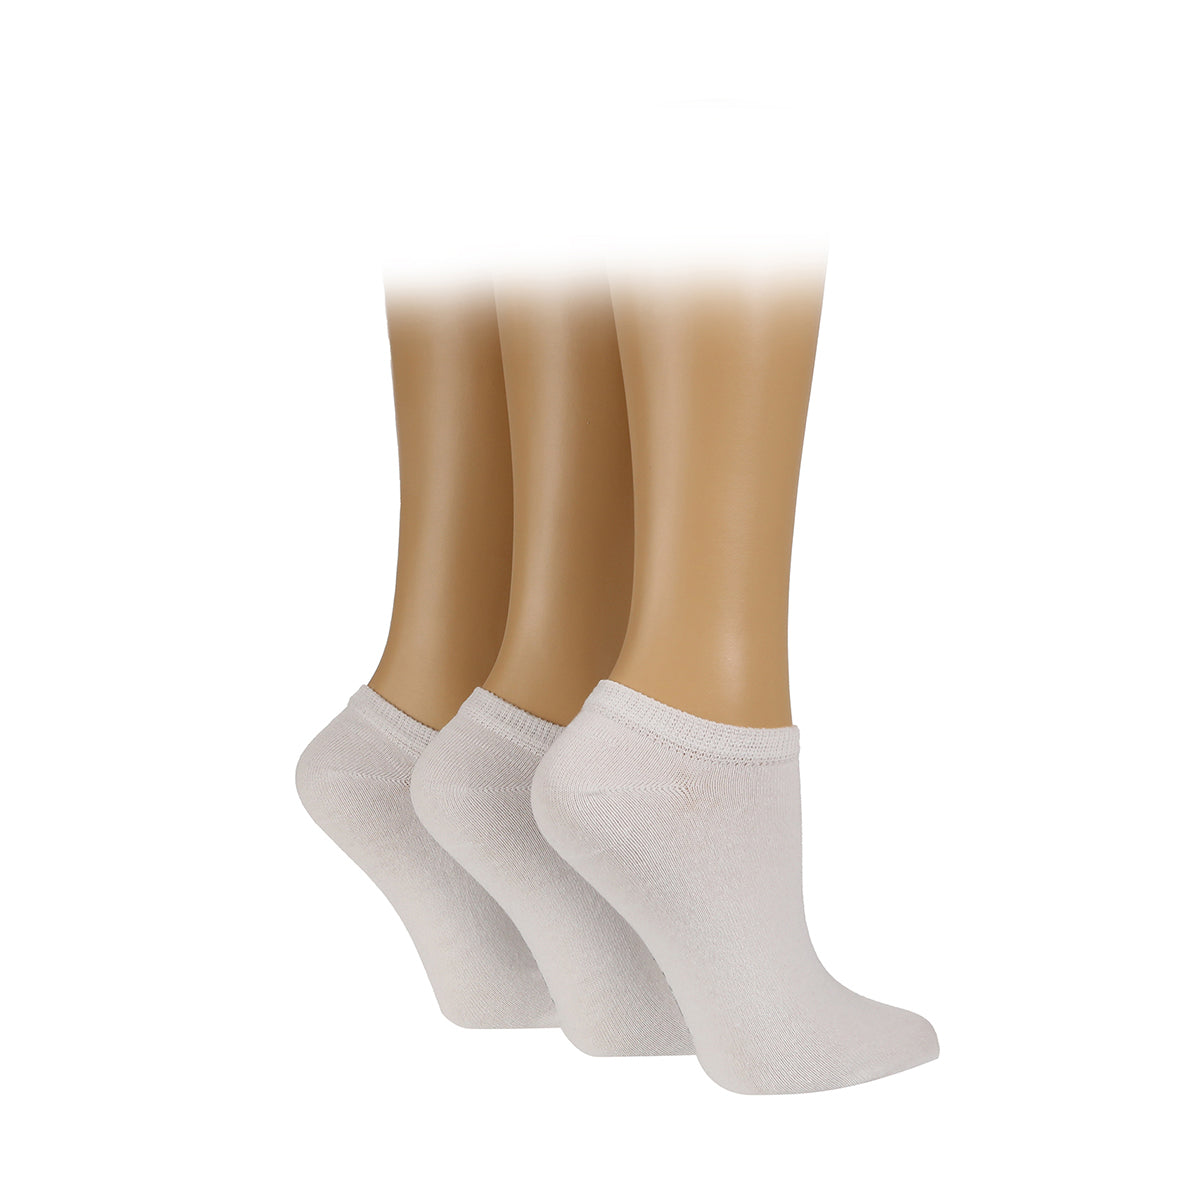 TORE 100% Recycled Men's Plain Trainer Socks - 3 Pairs